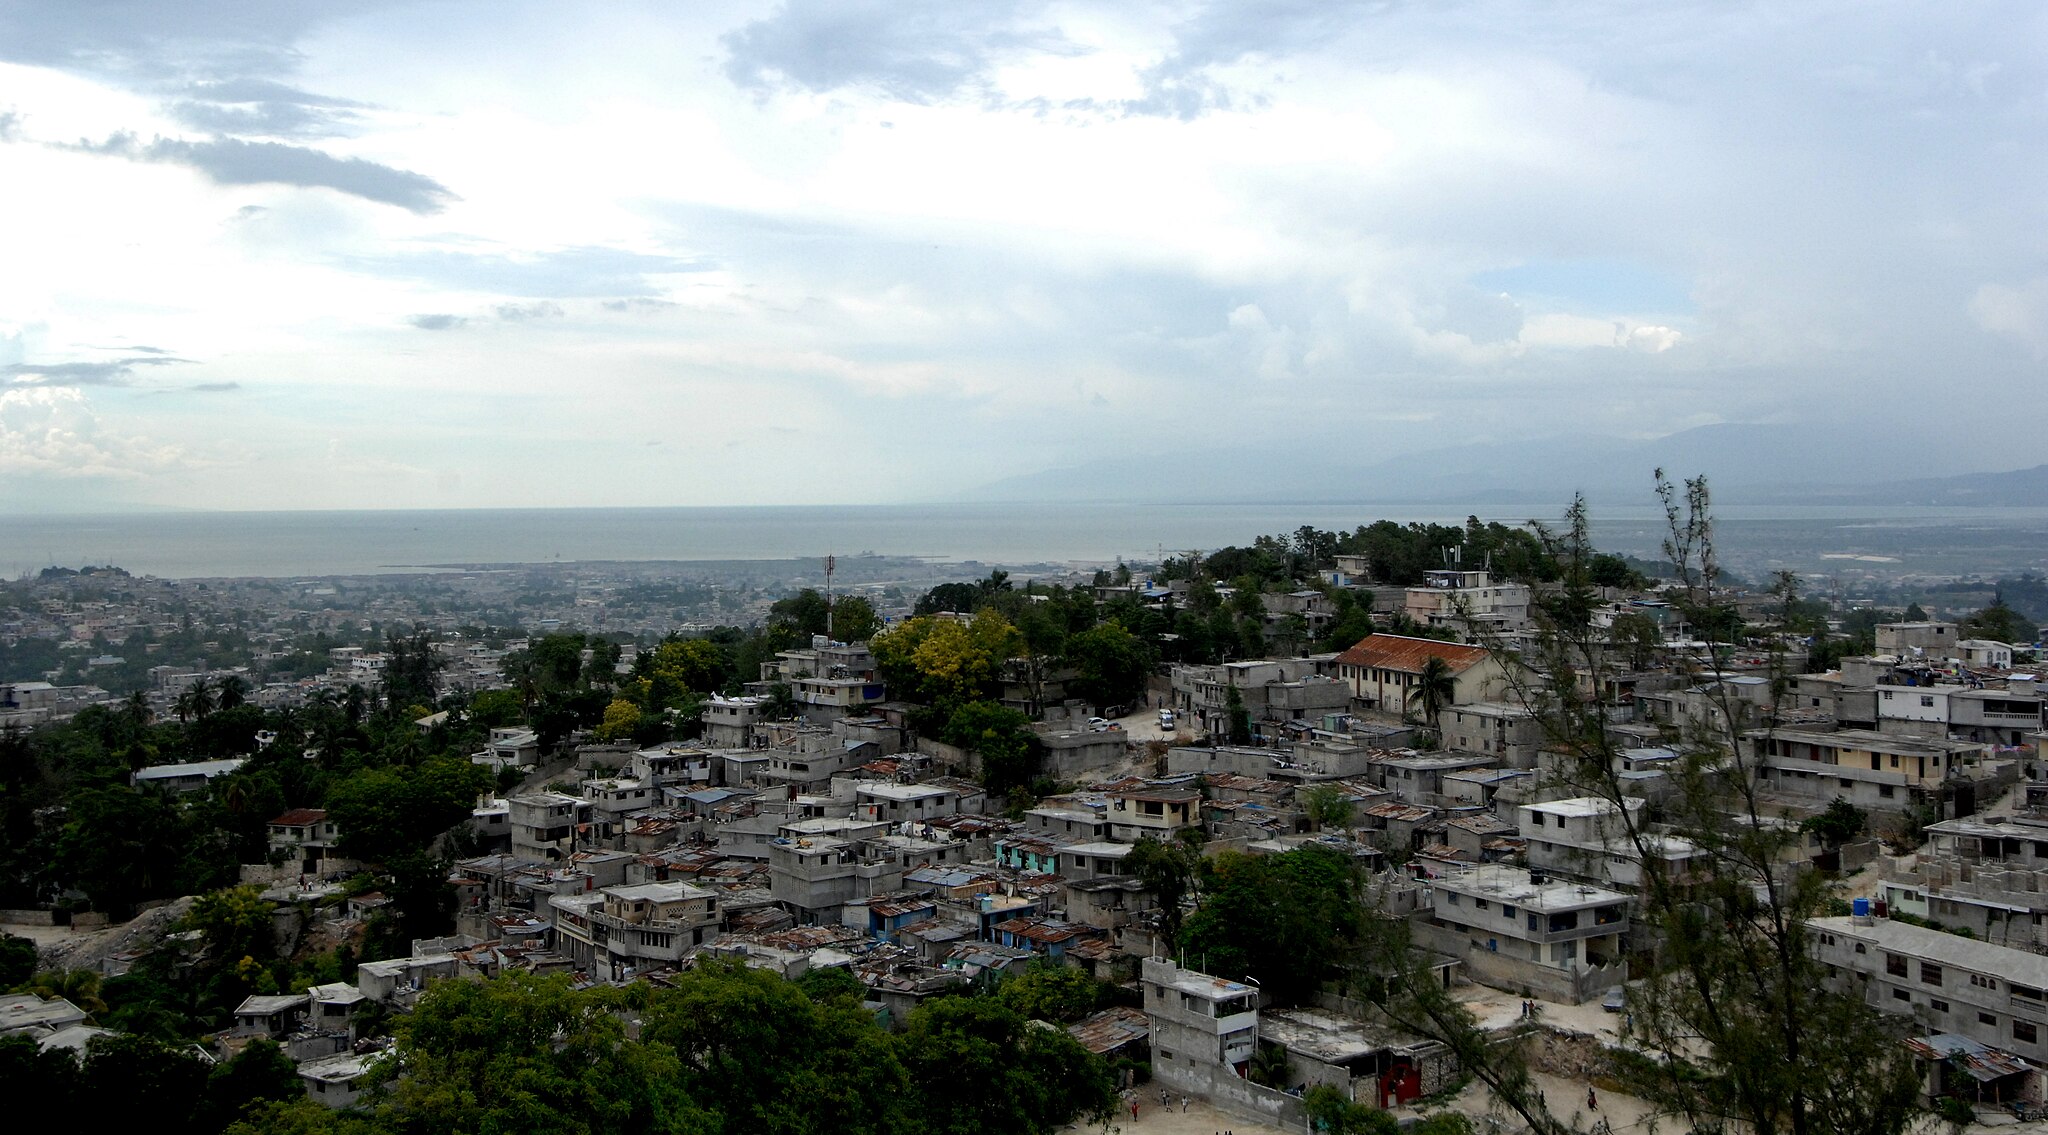 Haiti judge issues arrest warrants for 30+ senior officials